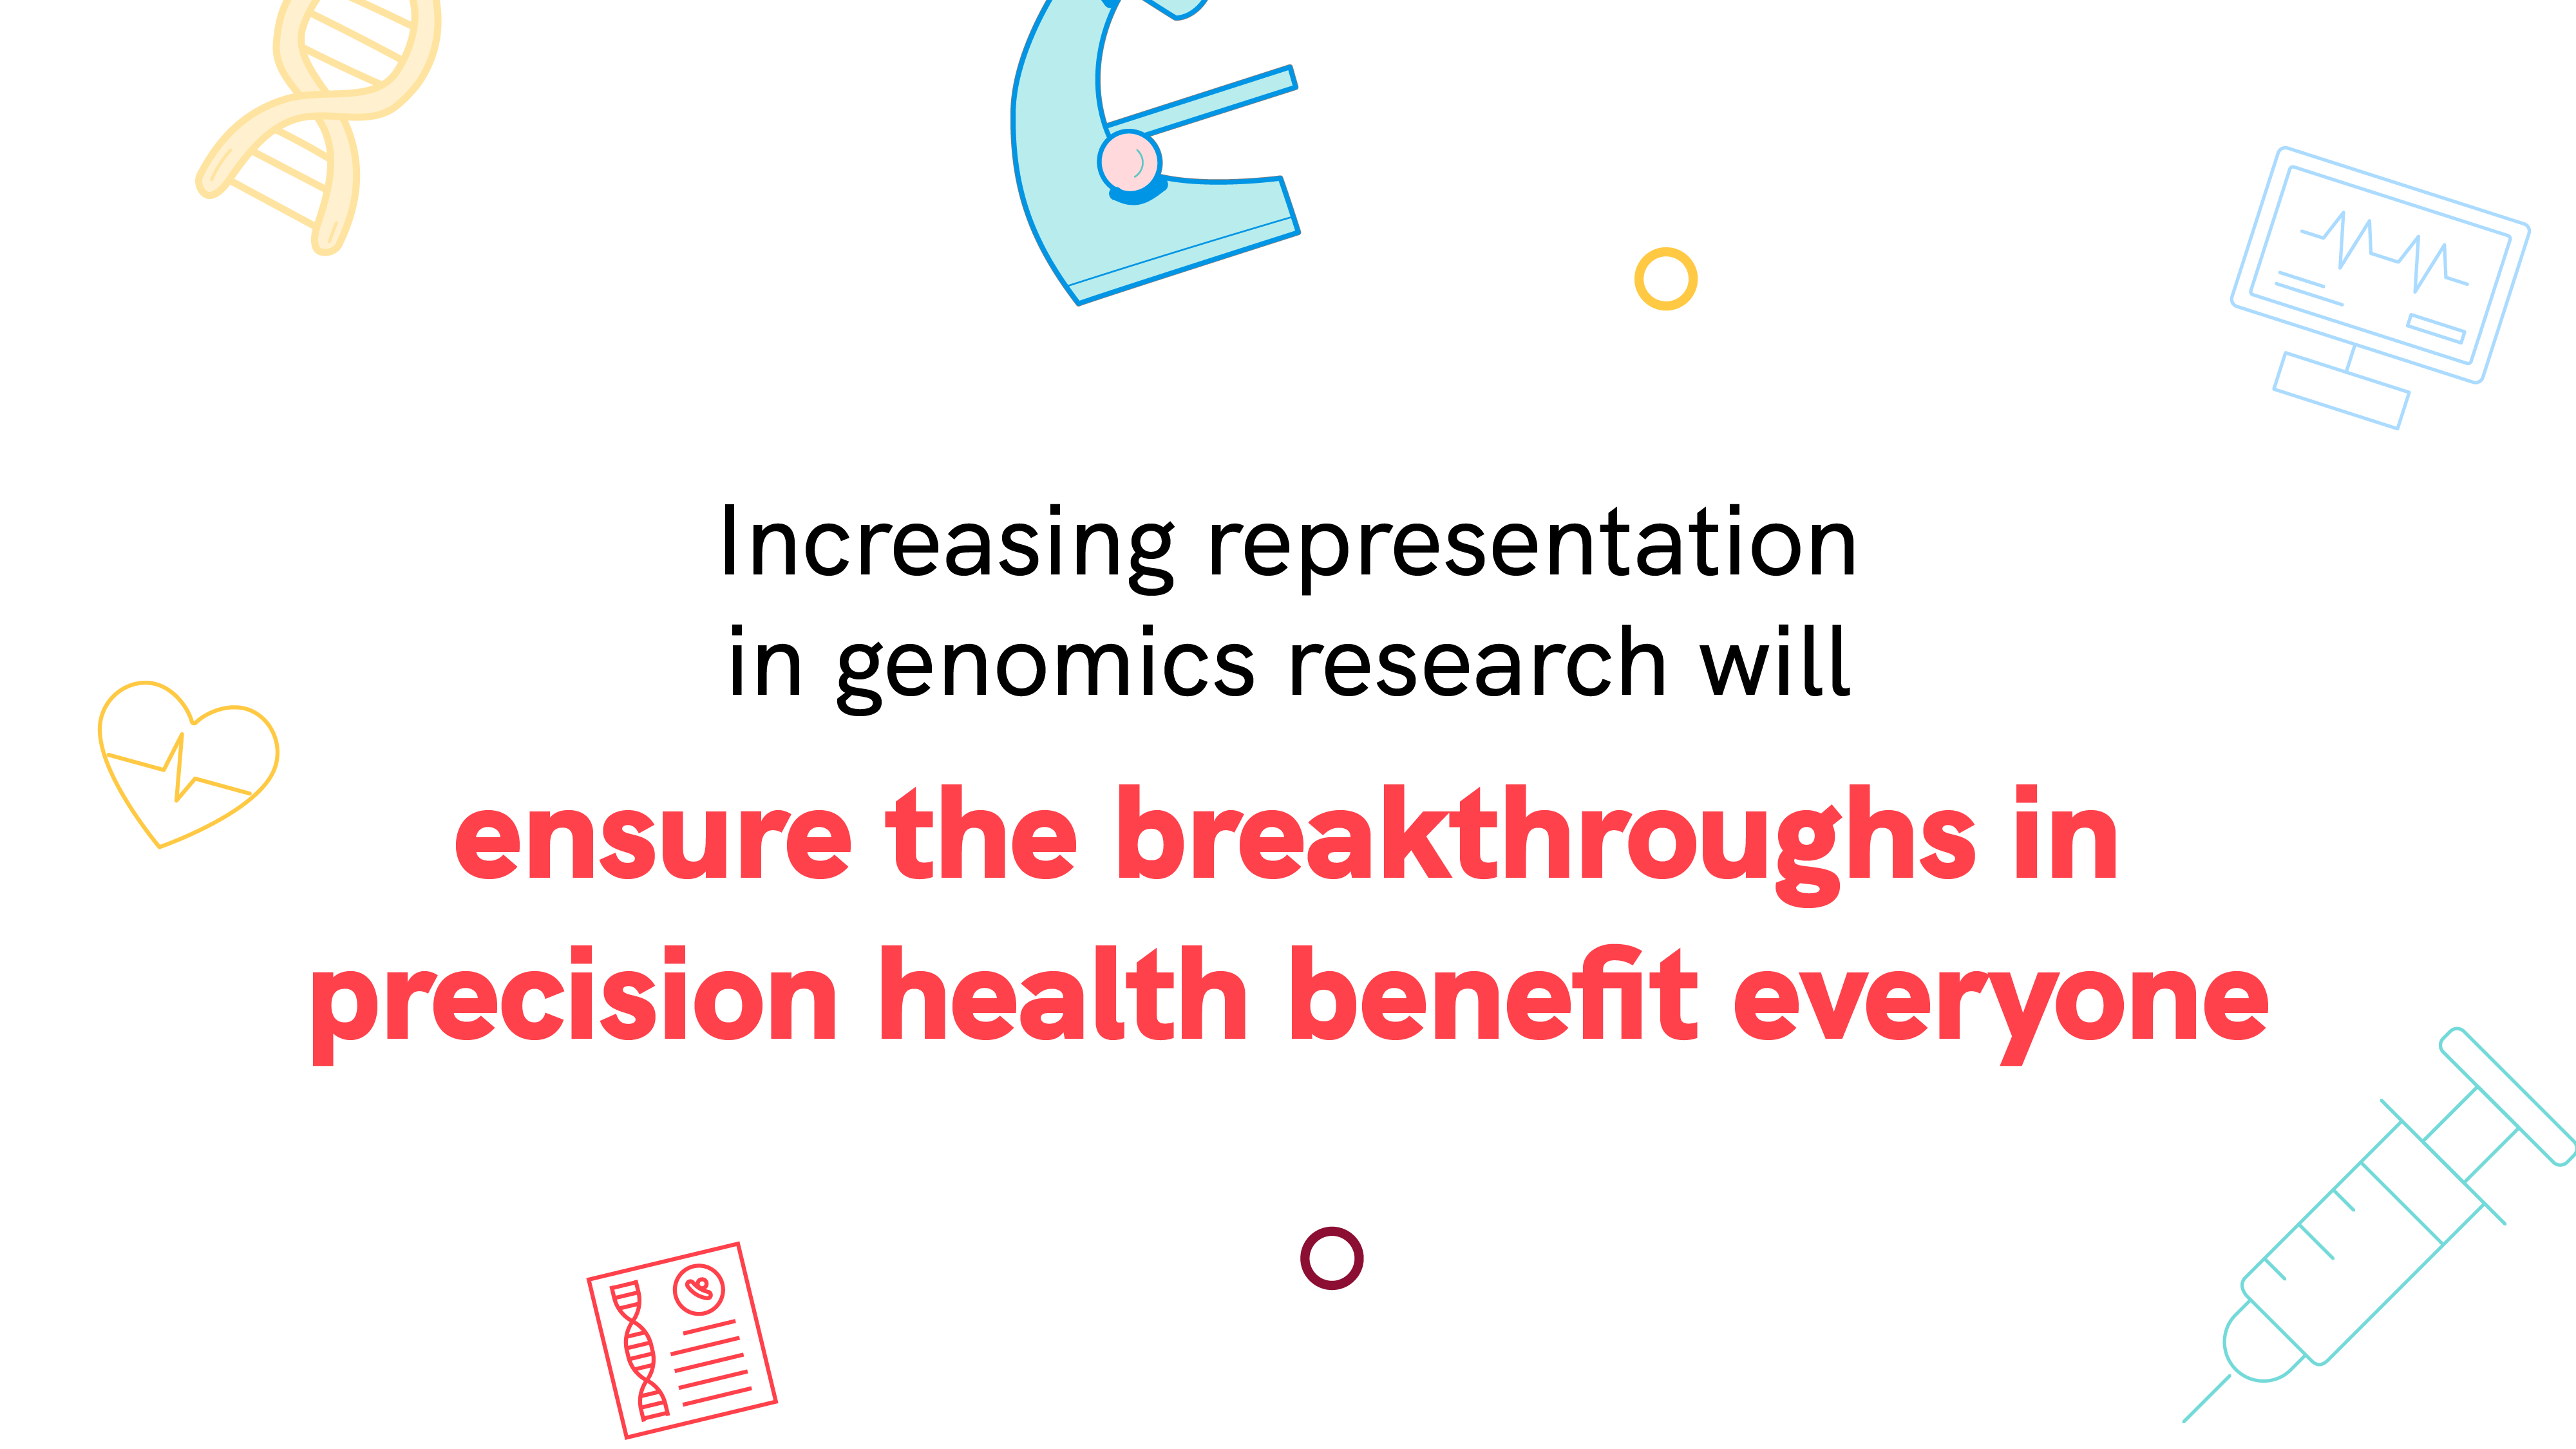 Increasing representation in genomics research will ensure the breakthroughs in precision health benefit everyone